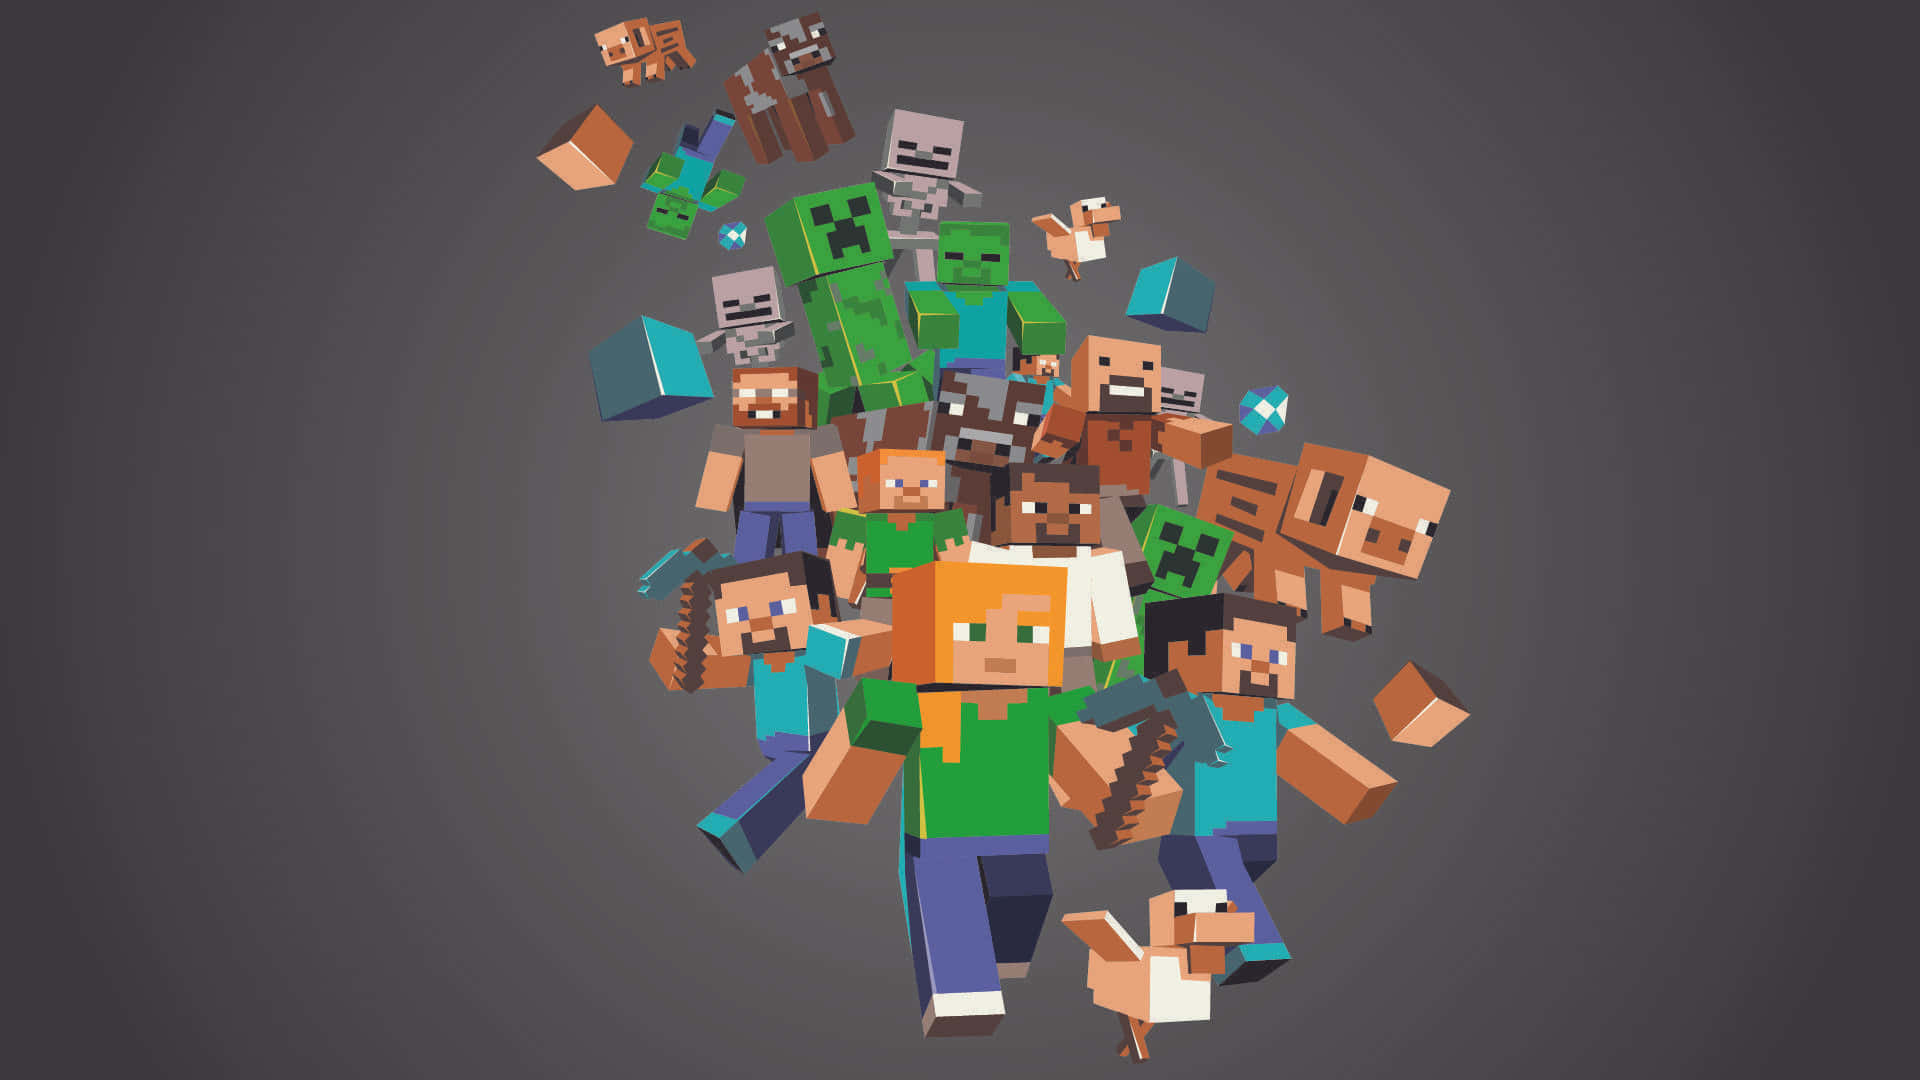 Explore the Cool Minecraft World!